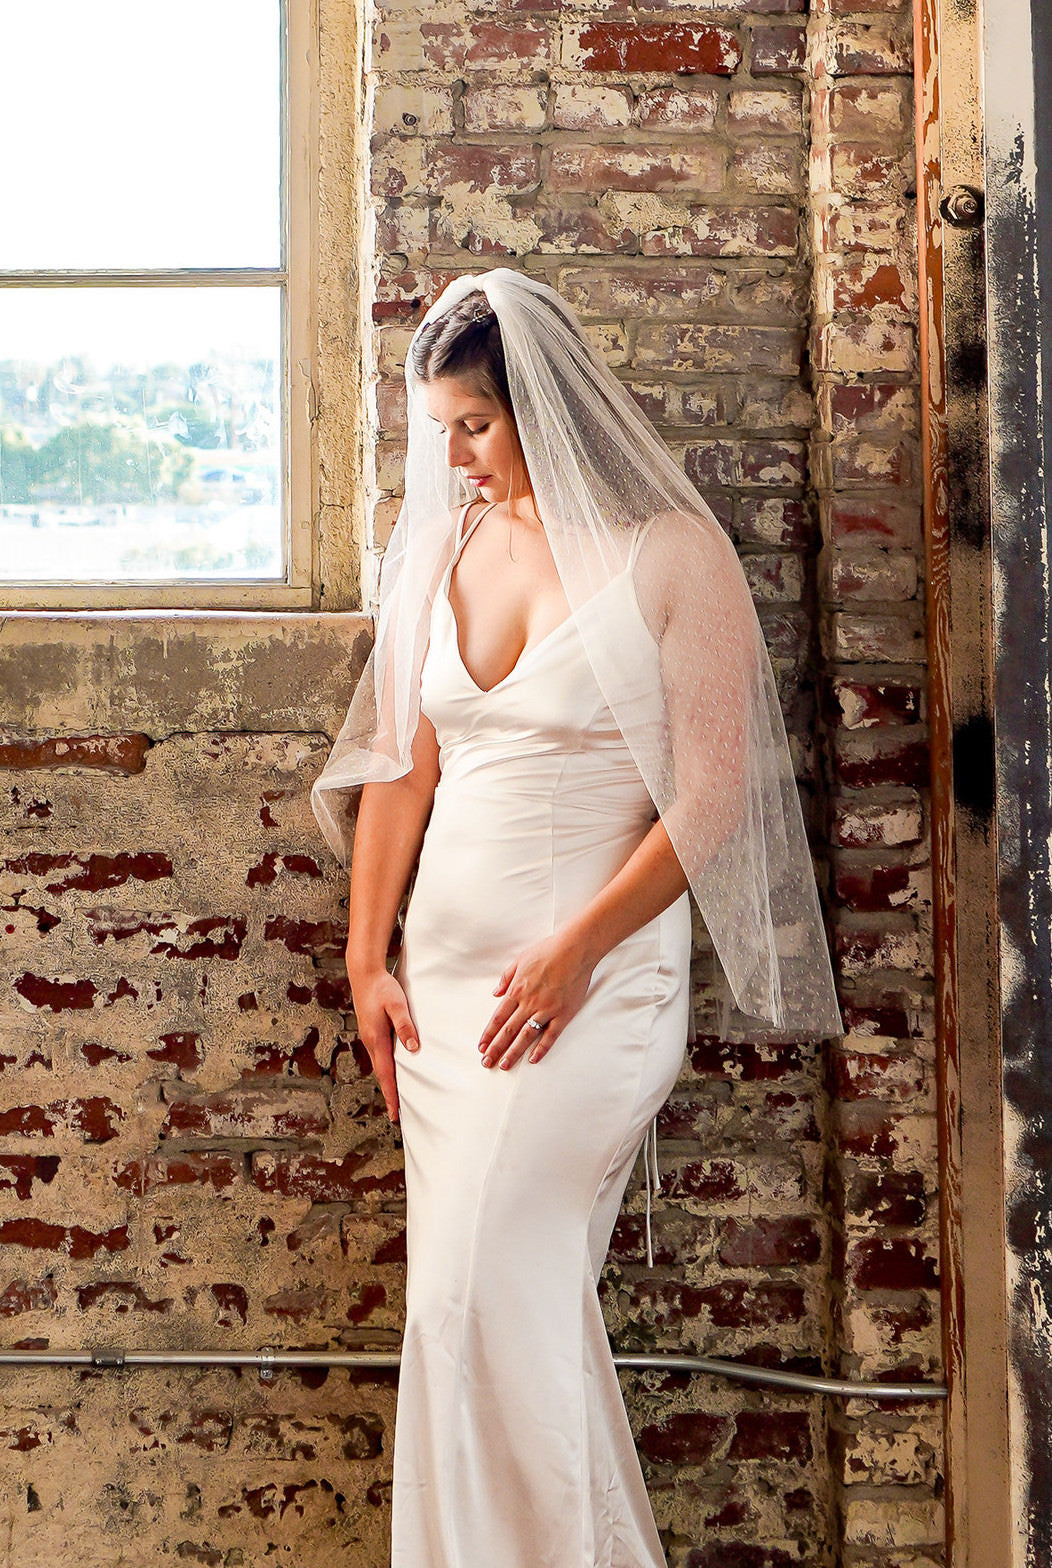 ivory Point d' Esprit bridal veil on elegant bride with hair down wearing silk sheath gown